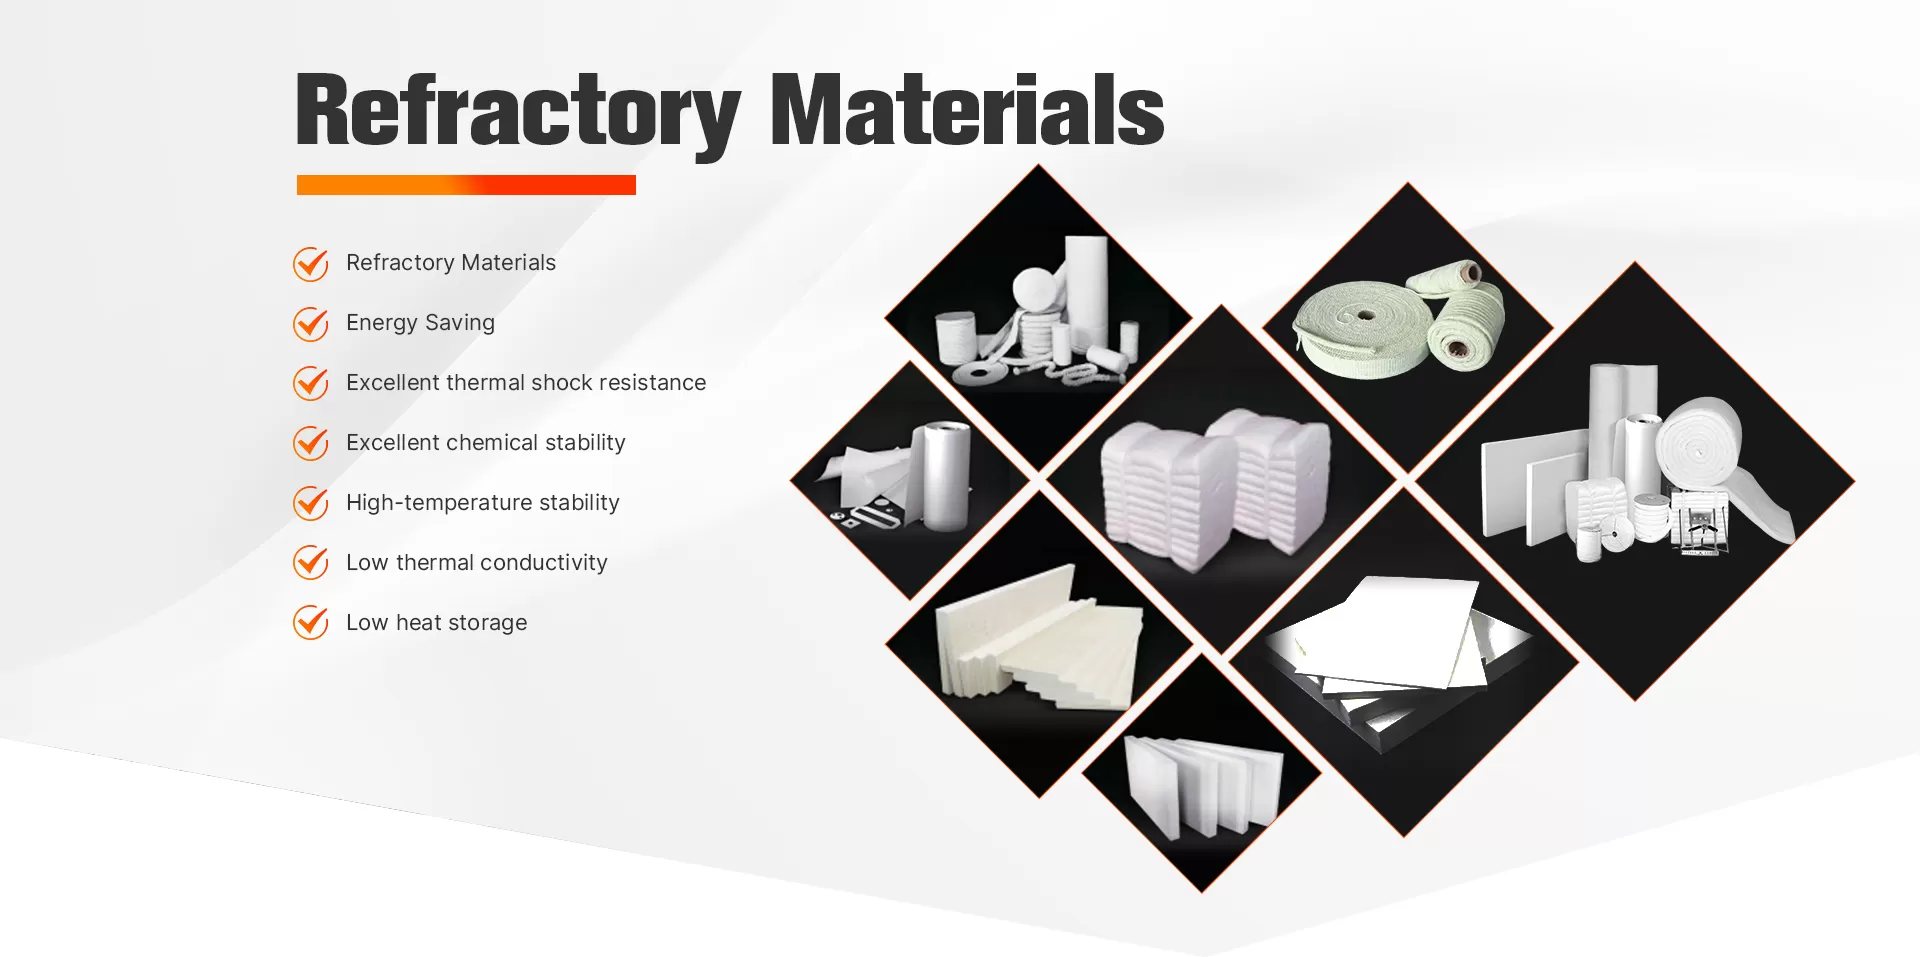 Refractory Materials/Energy-saving materials